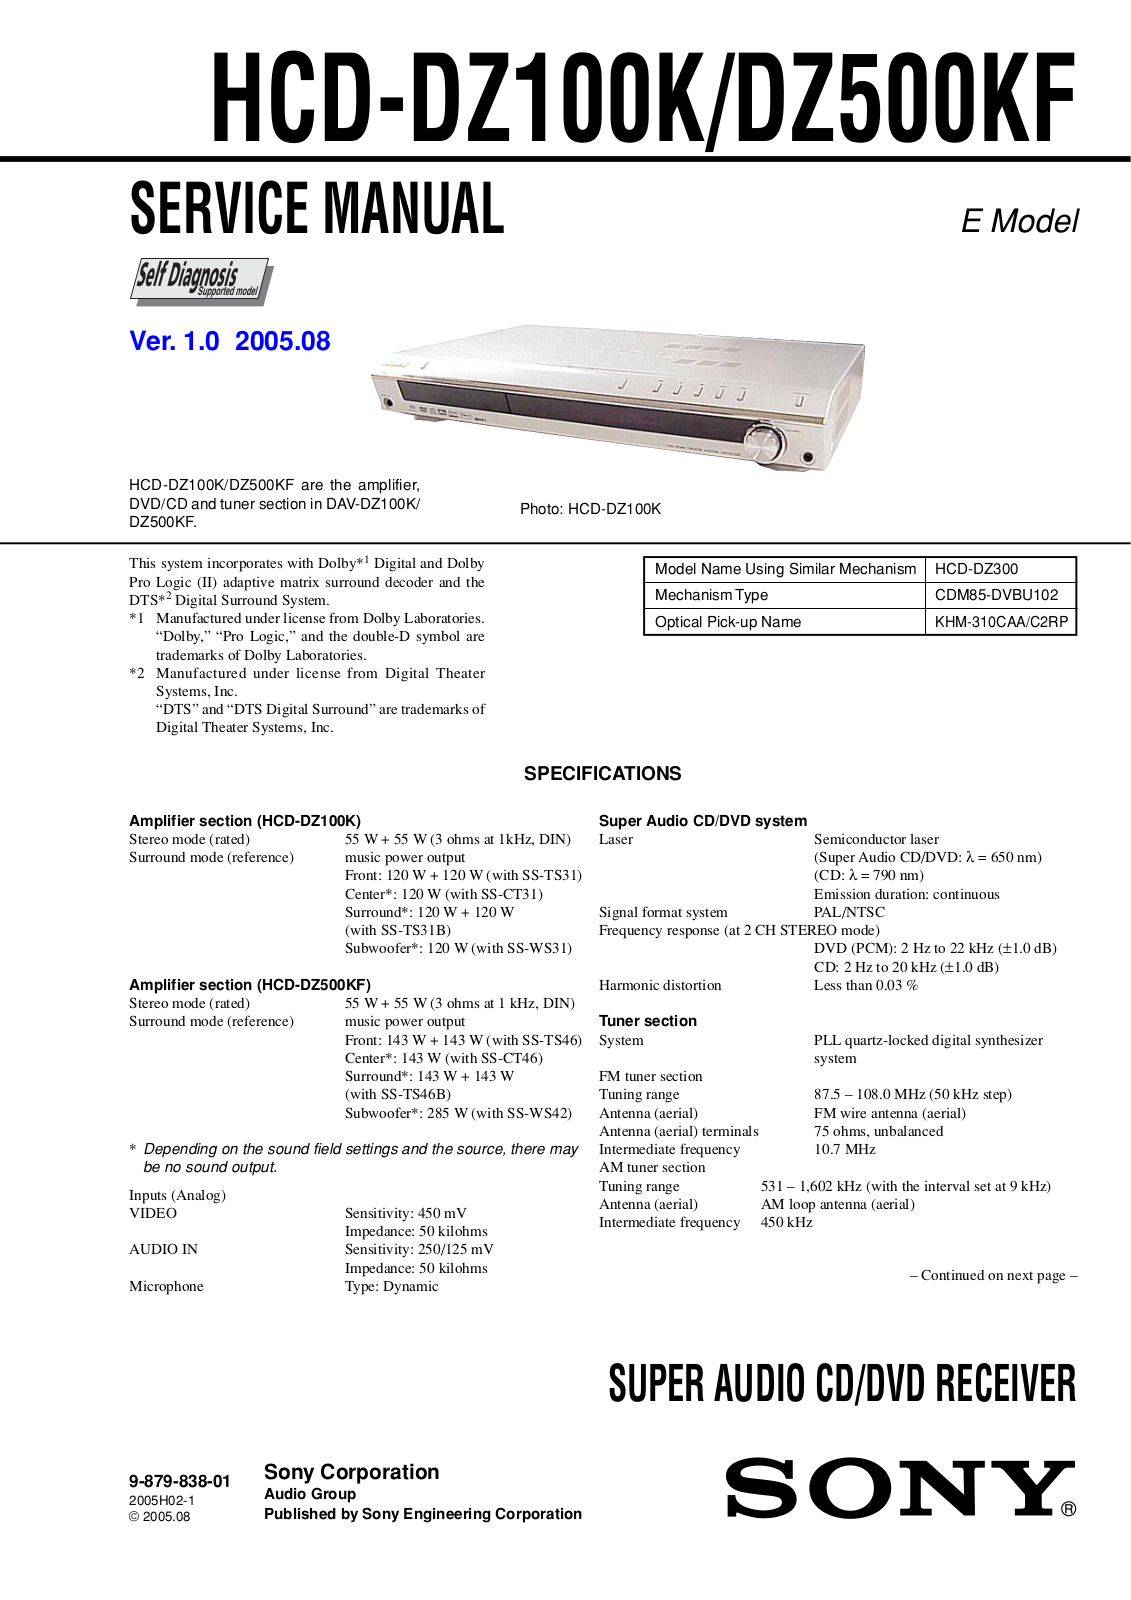 Sony HCD-DZ100K, HCD-DZ500KF Service Manual